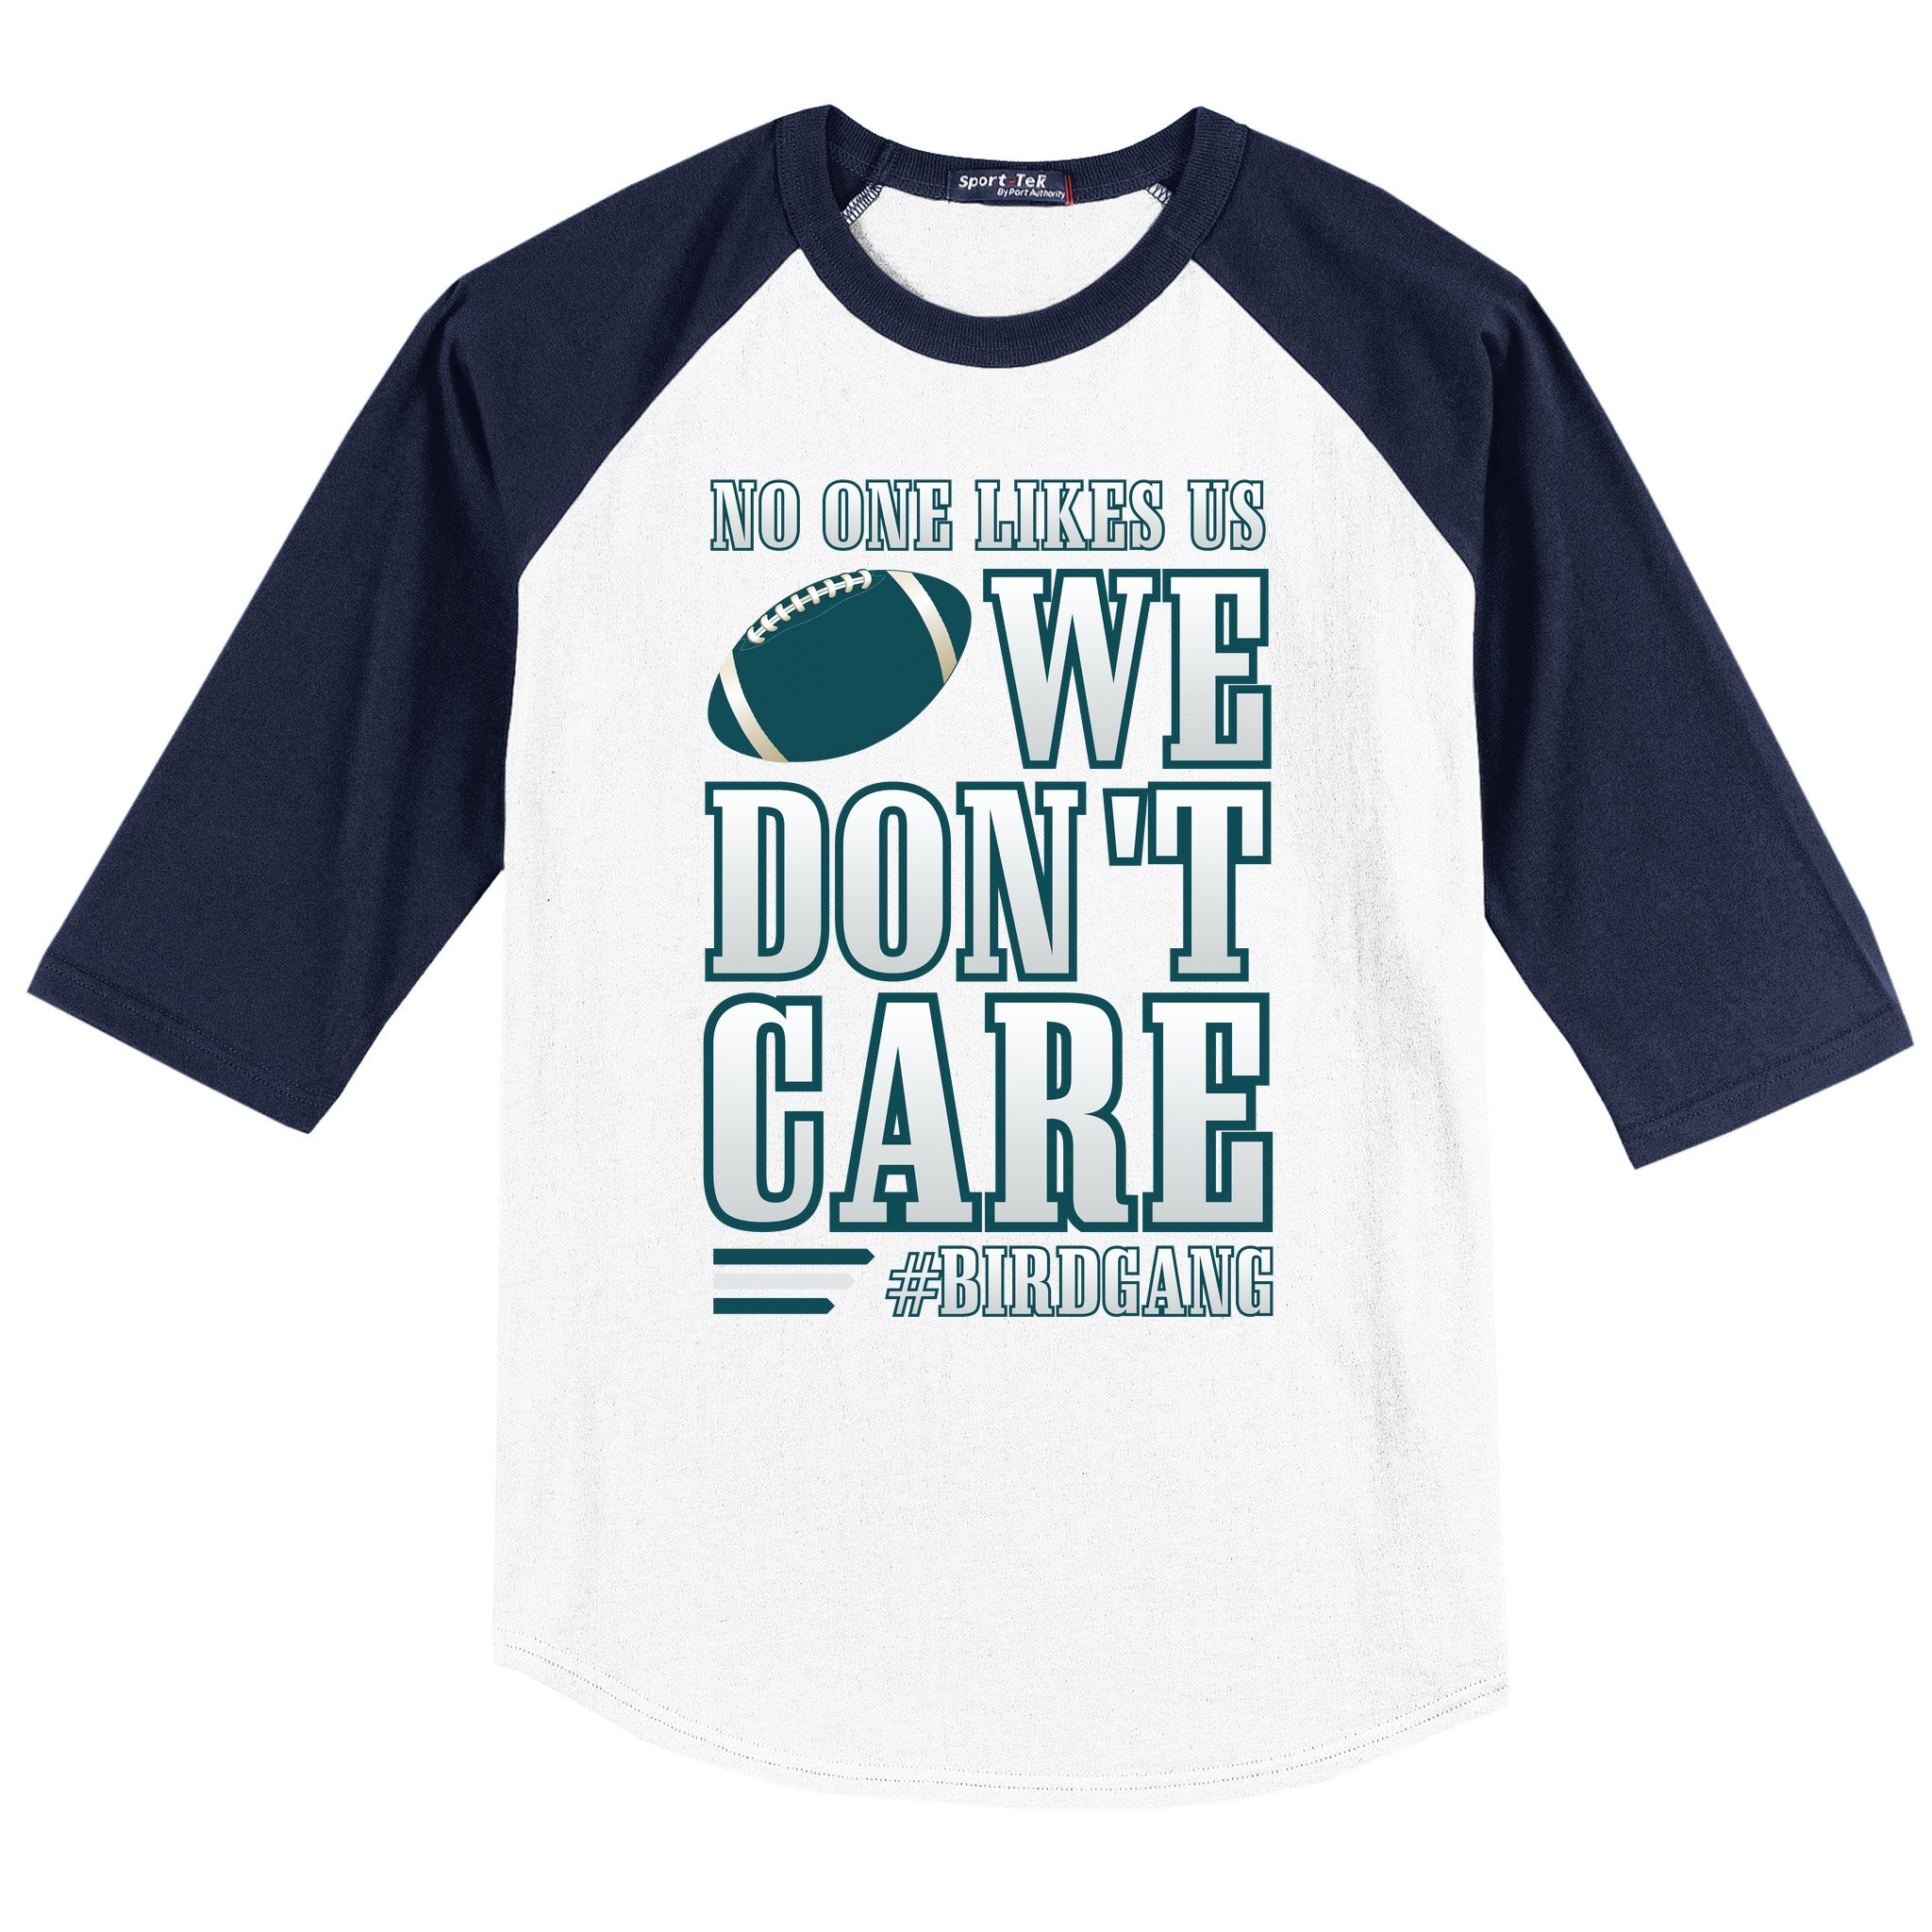 It's a Philly thing, Go Birds, Go Eagles, Philadelphia Eagles, Philadelphia  Football Lover, Gift for Eagles Fan, Eagles Playoffs | Kids T-Shirt